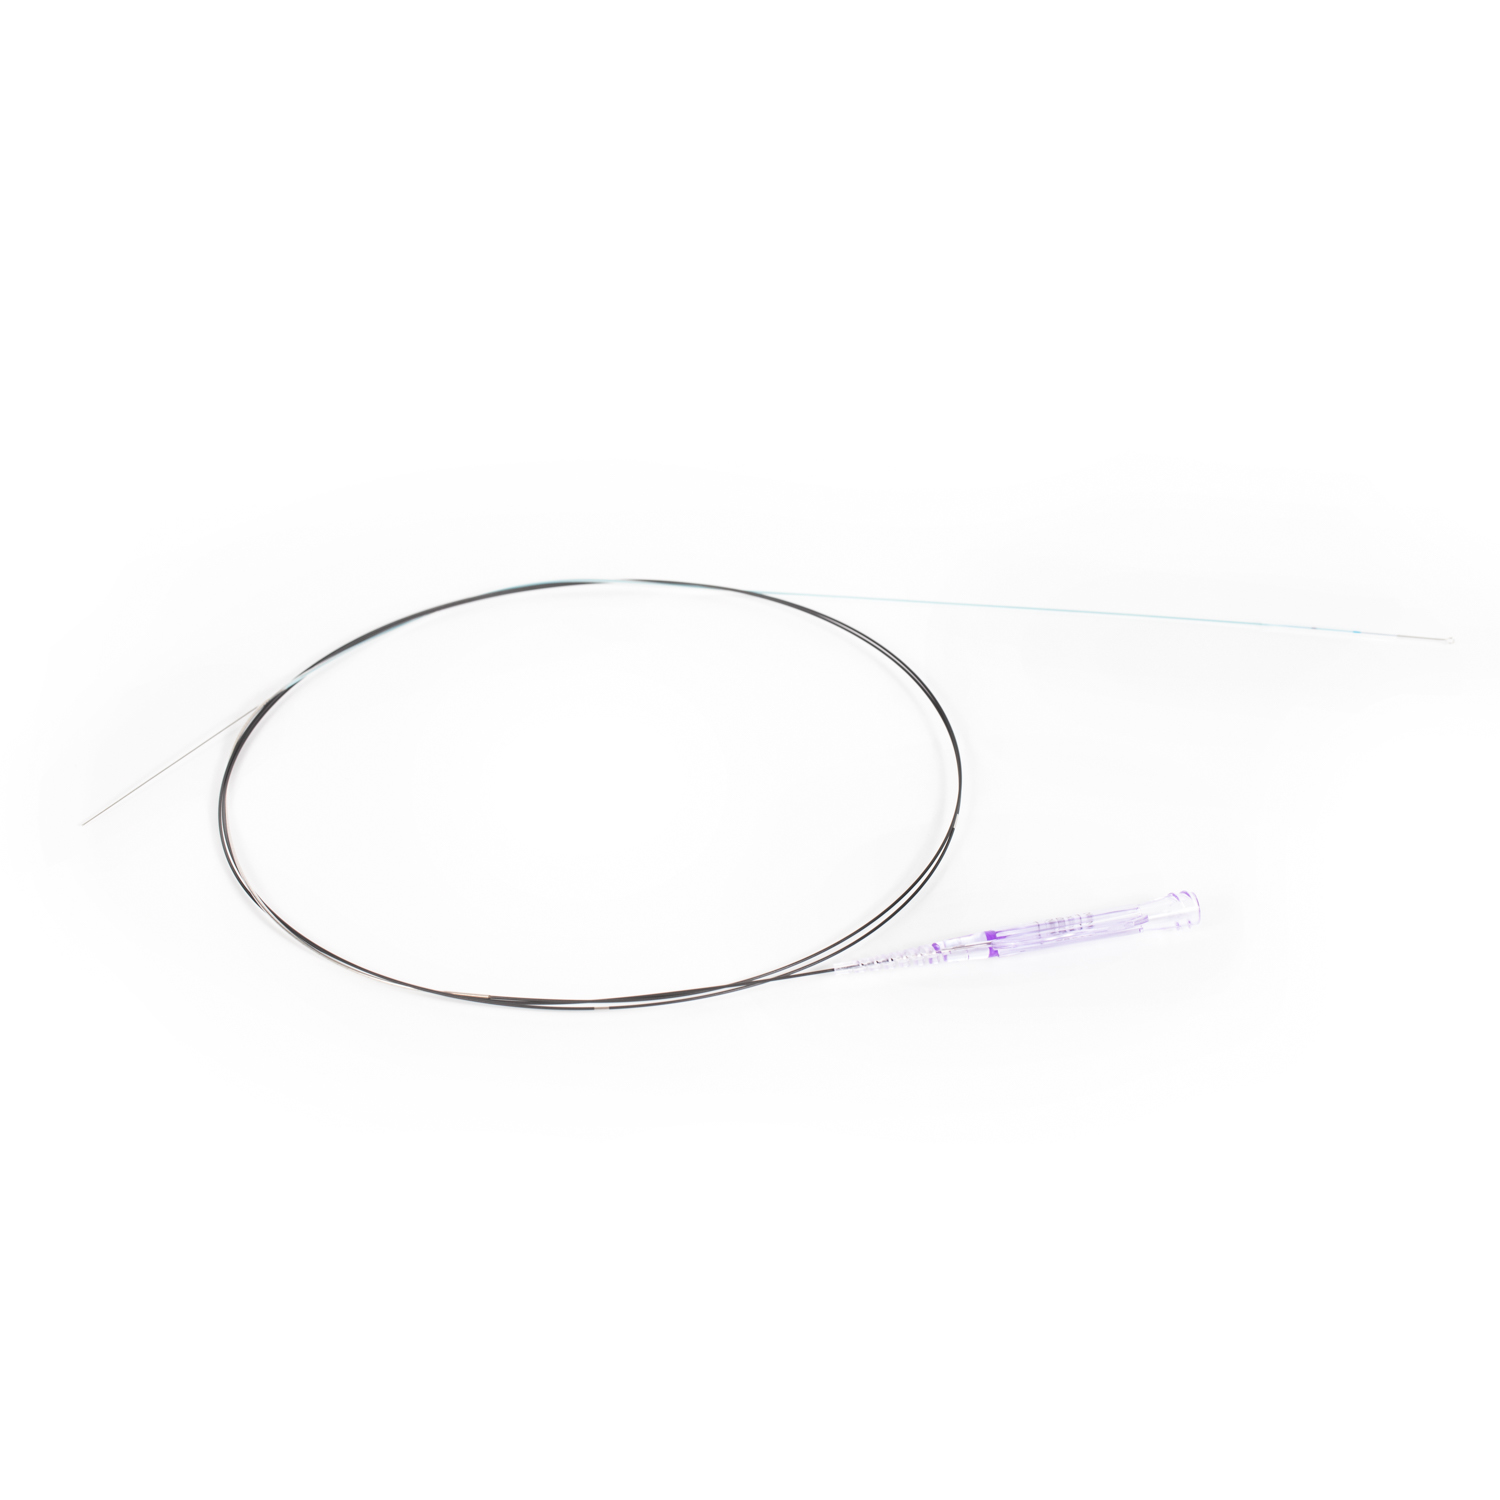 Disposable CTO Balloon Dilatation Catheter with FDA Certificate